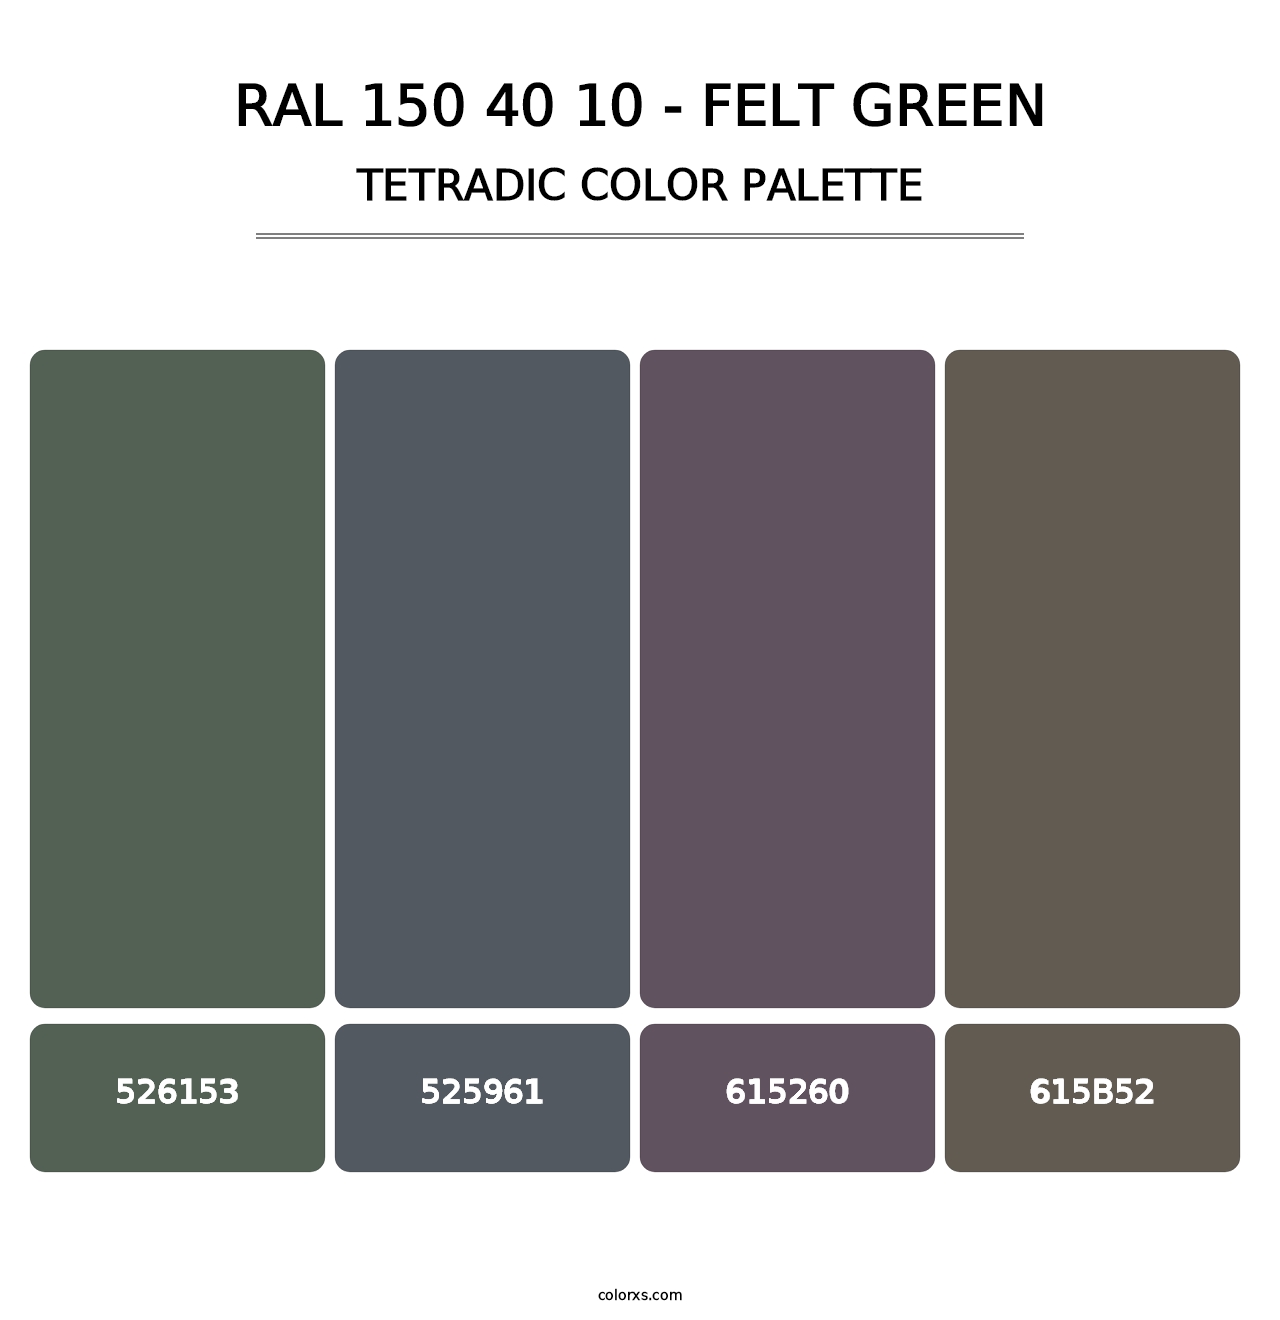 RAL 150 40 10 - Felt Green - Tetradic Color Palette